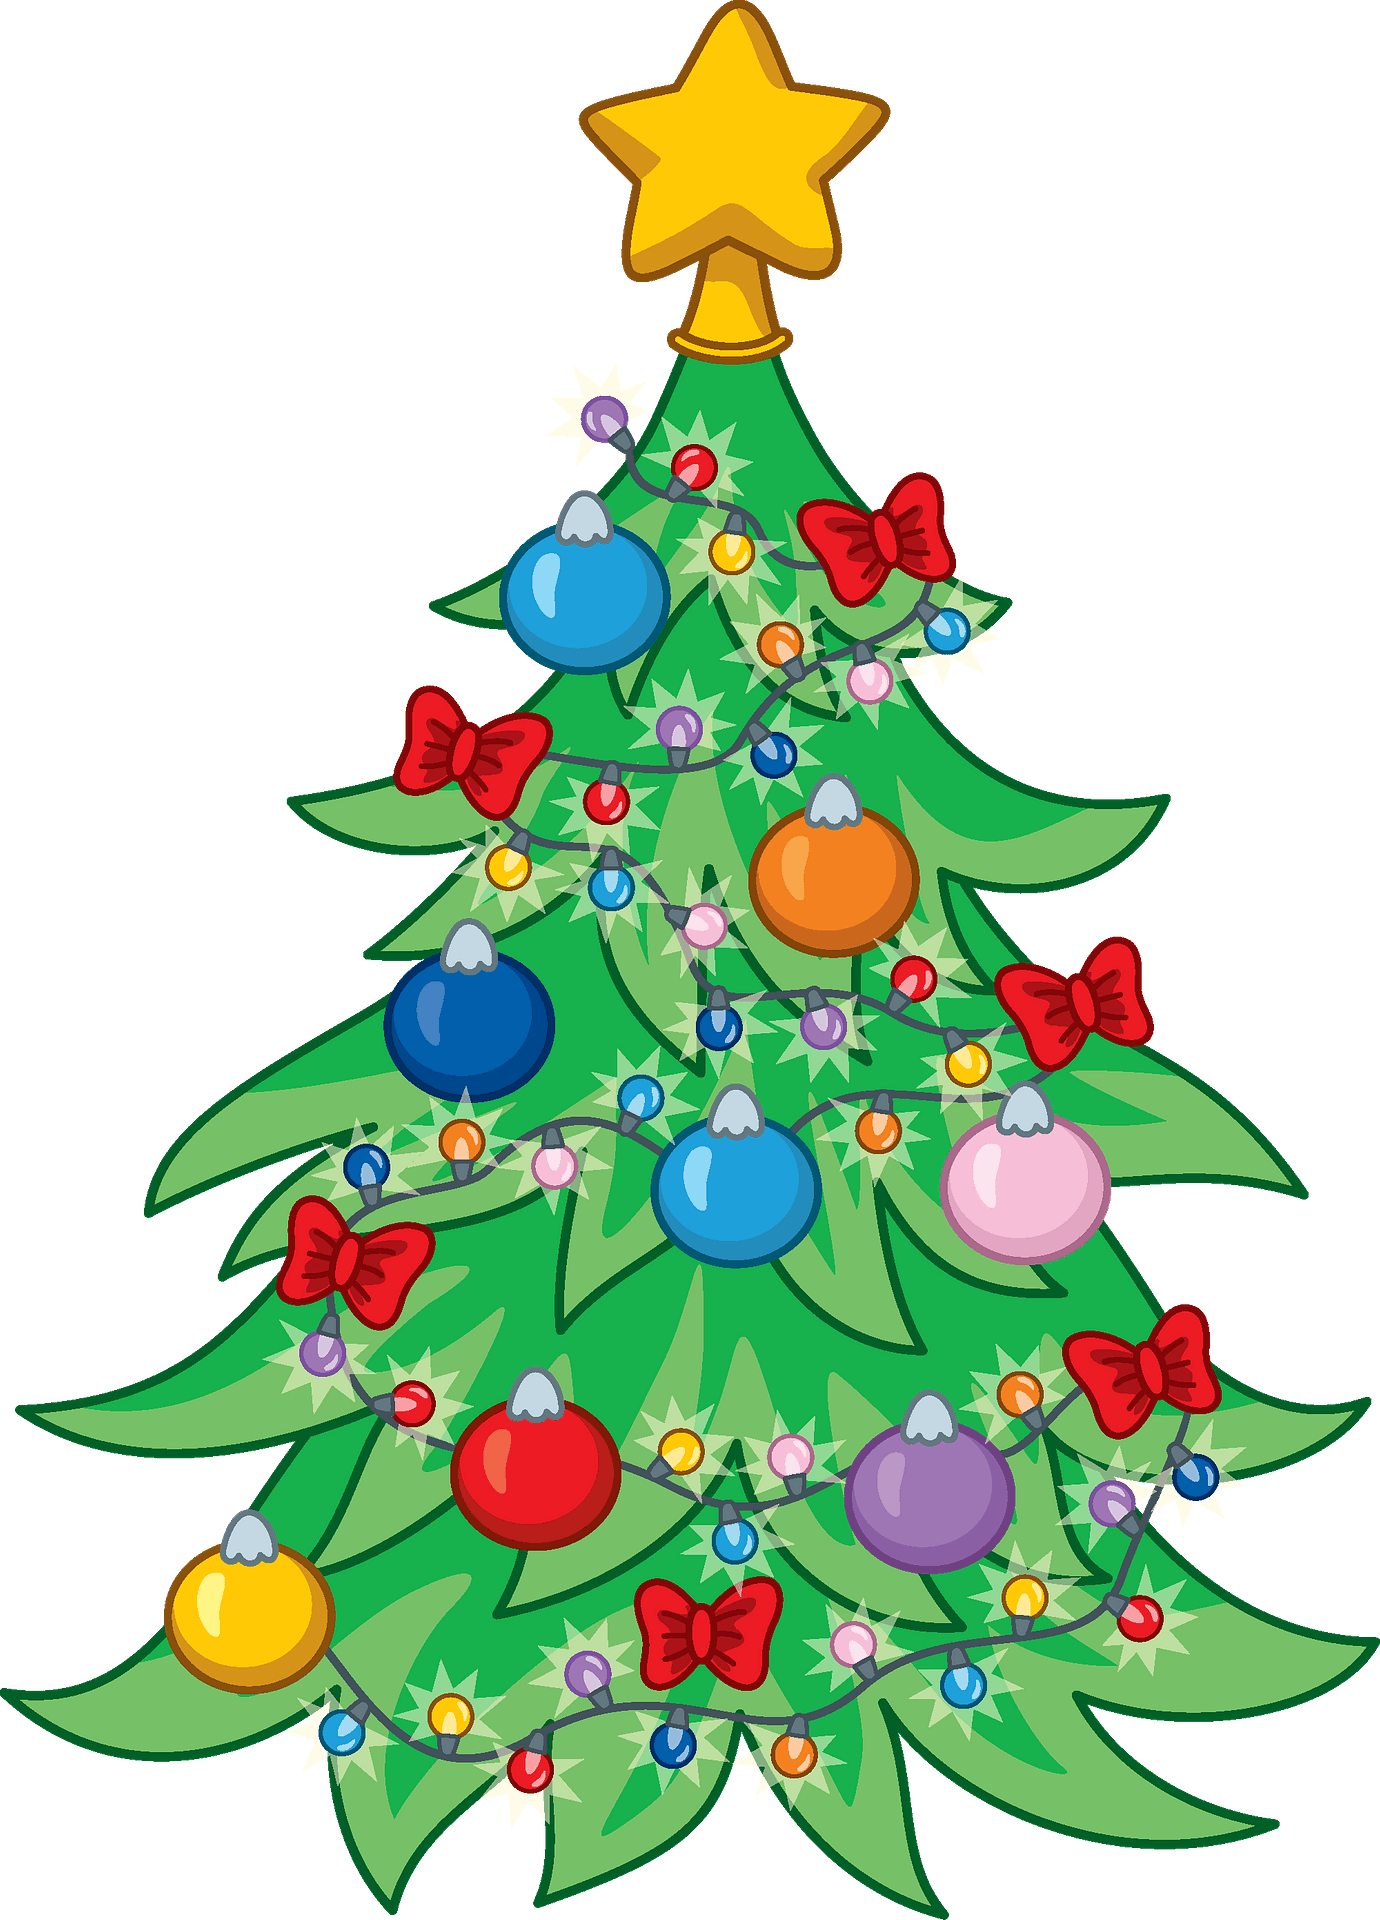 Christmas tree clipart. Free download transparent .PNG | Creazilla ...